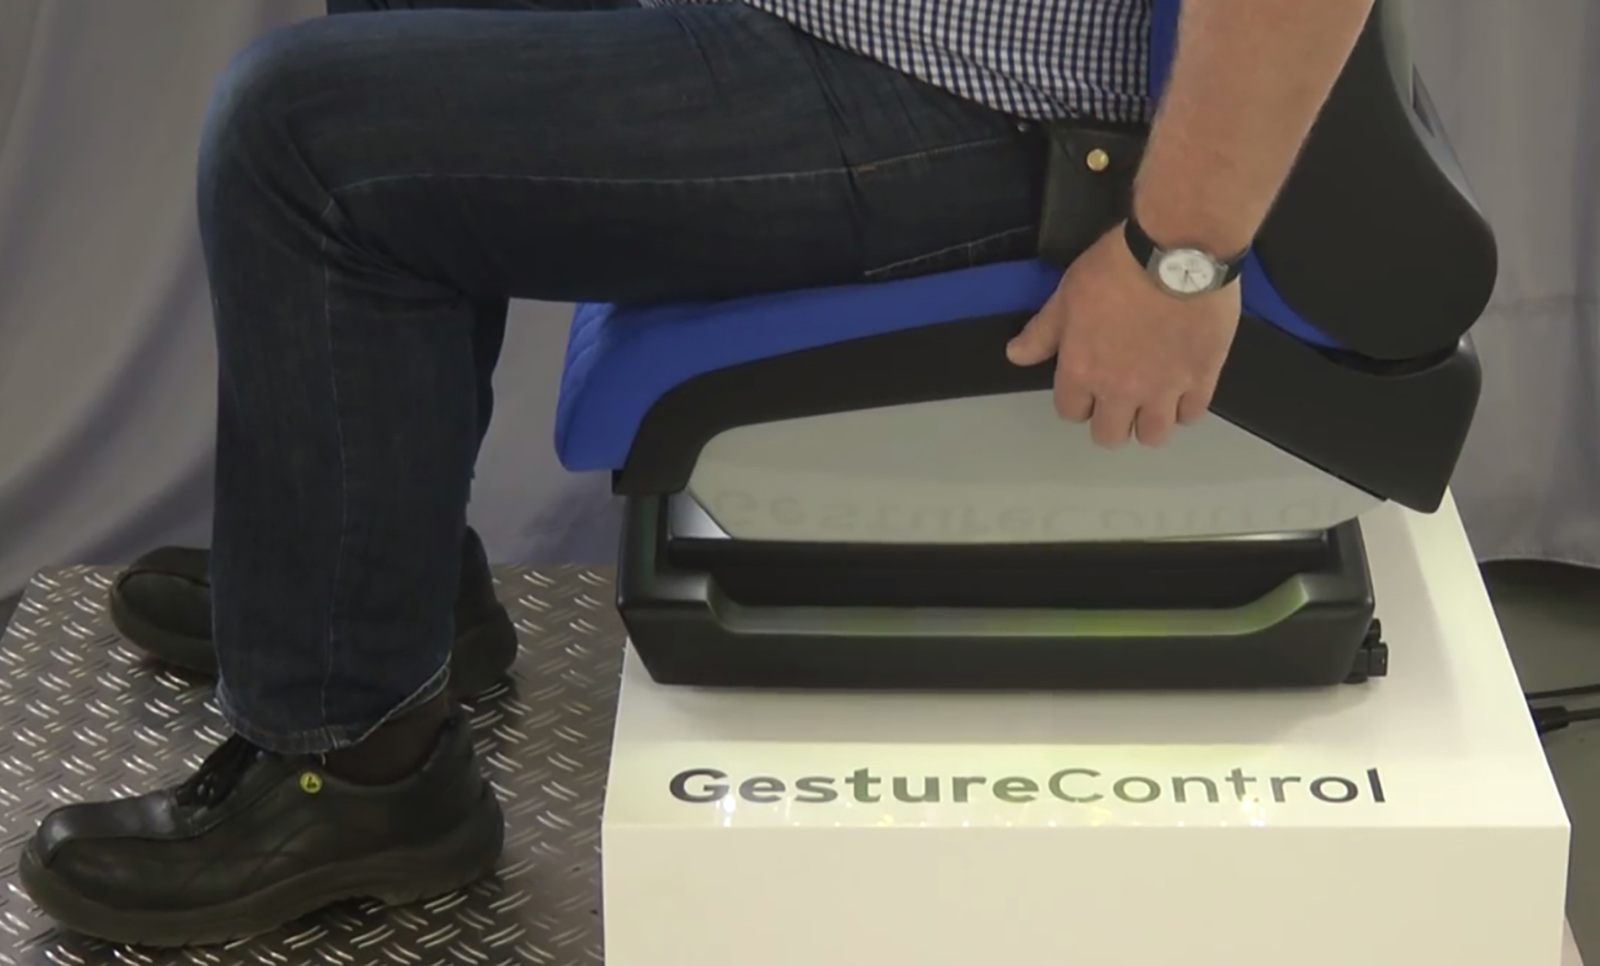 Gesture controlled driver’s seat improves ergonomics